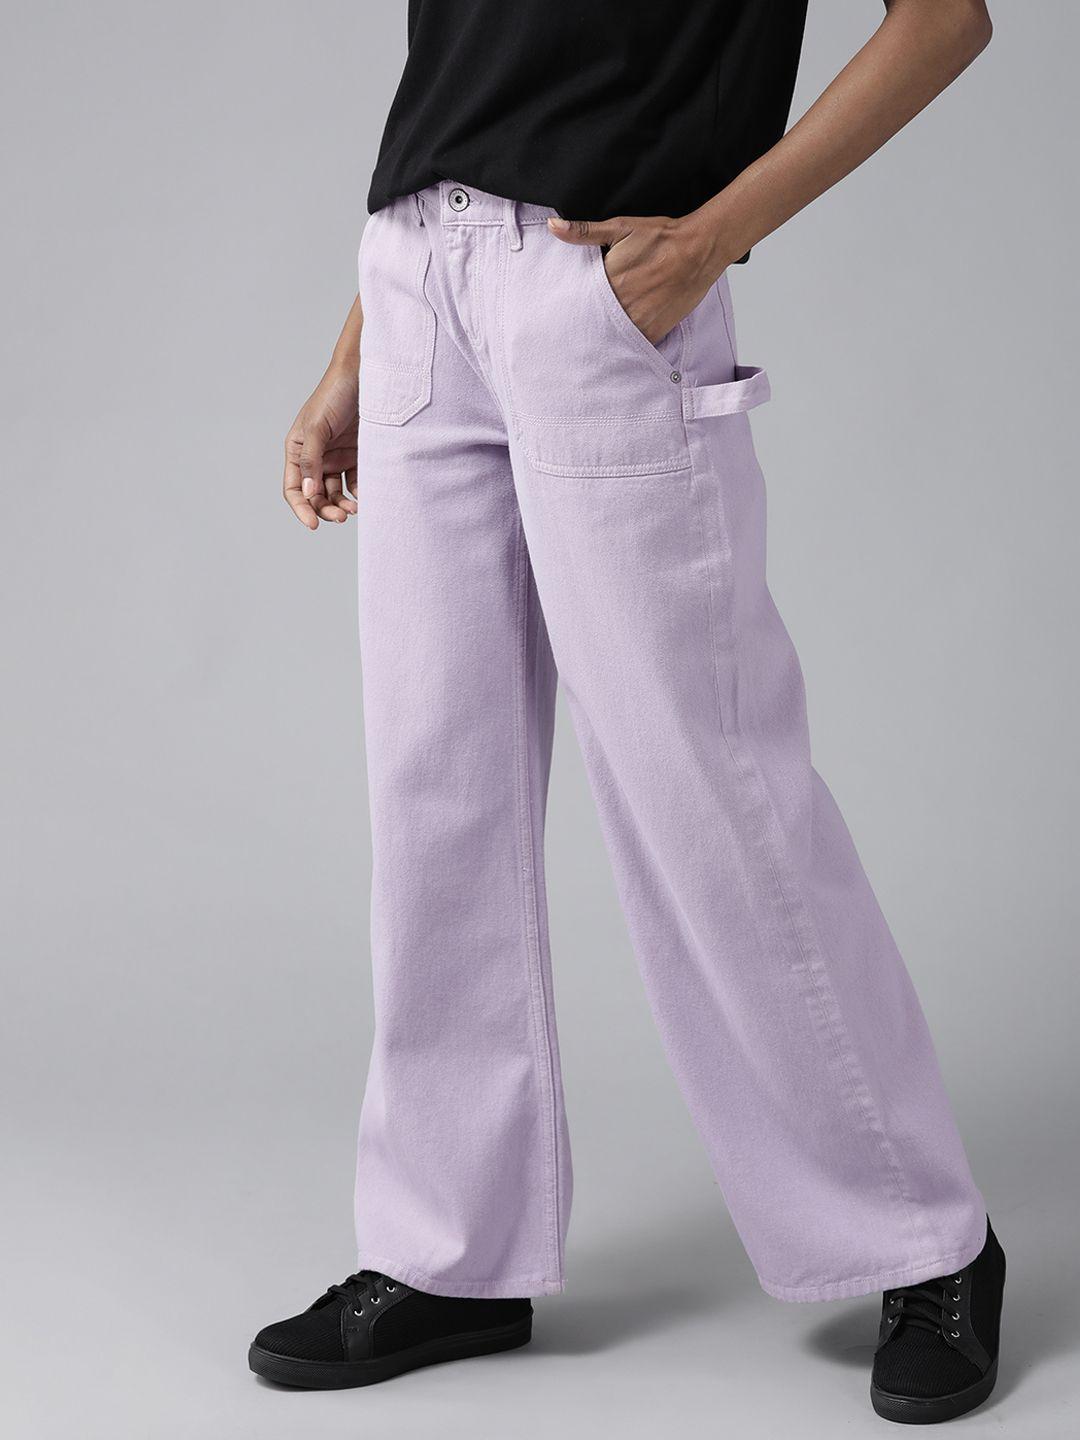 the roadster lifestyle co women lavender pure cotton wide leg jeans